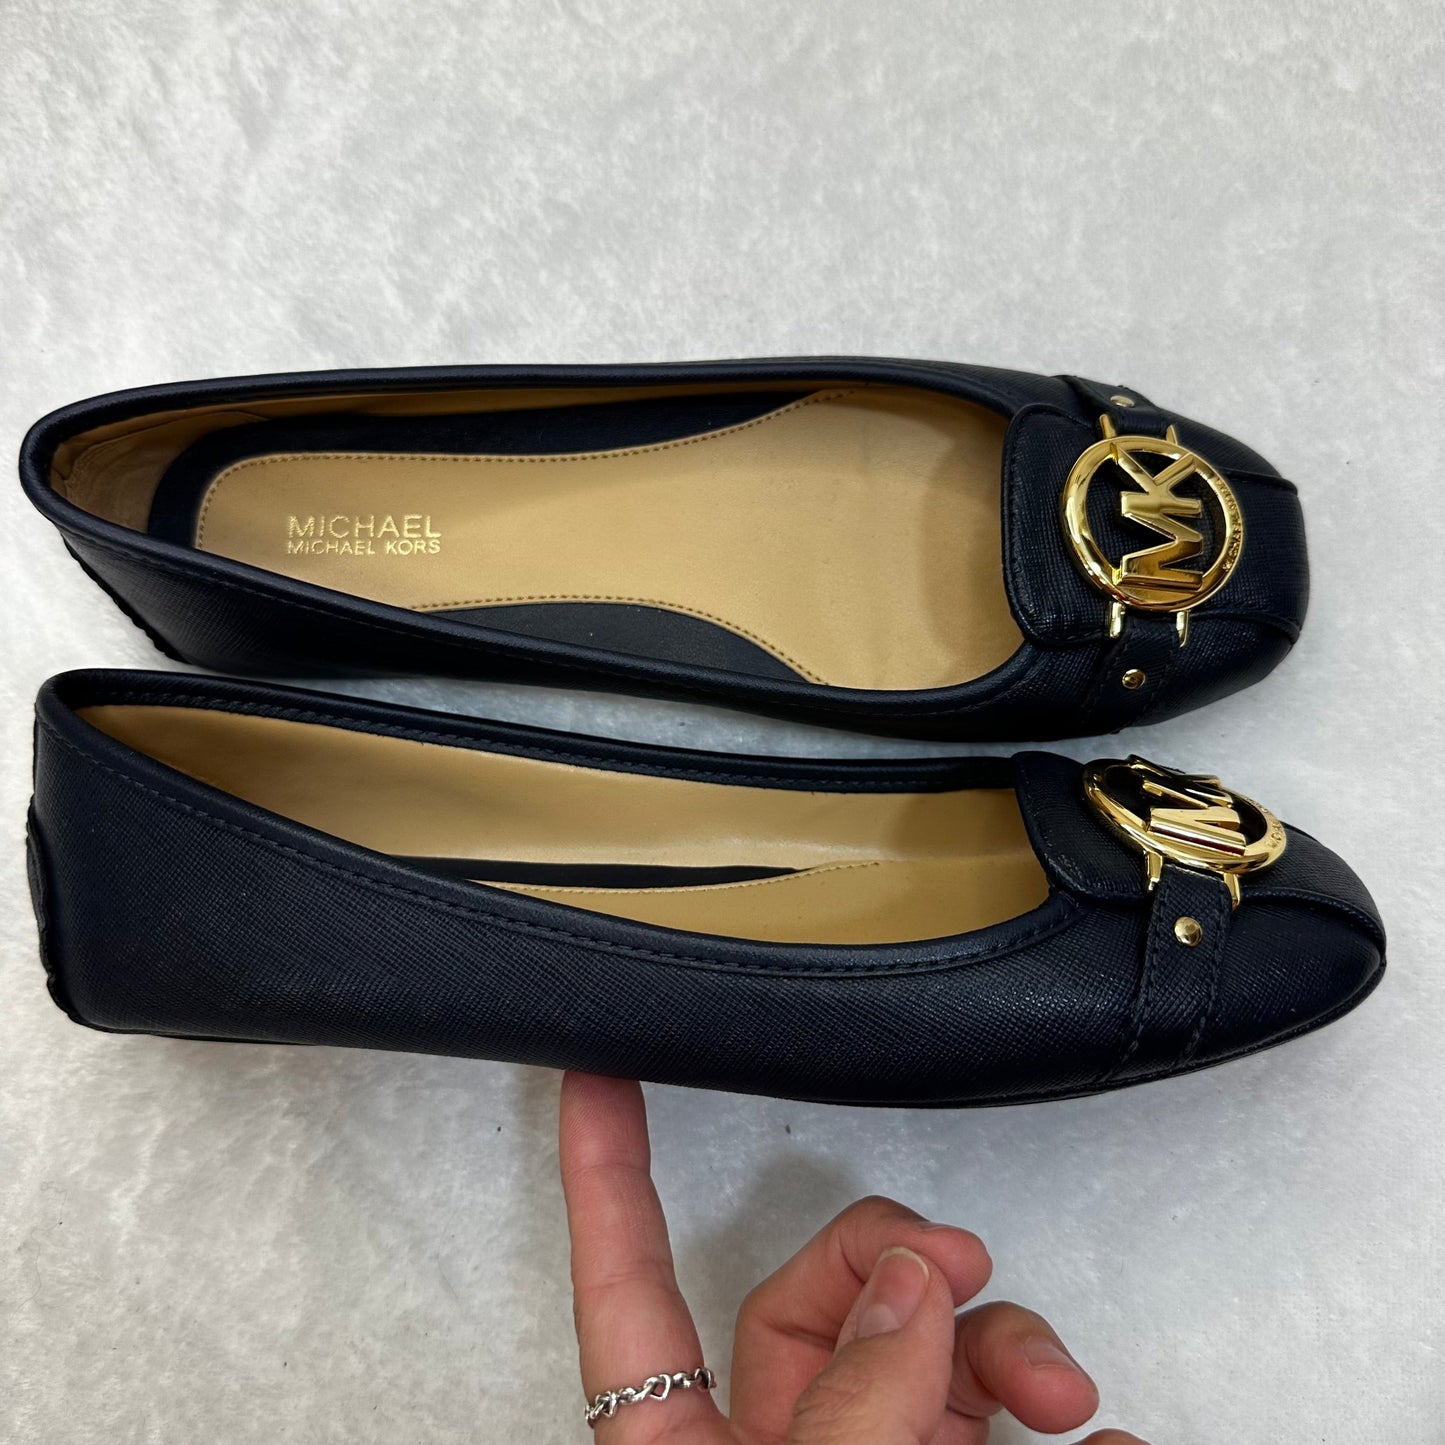 Navy Shoes Flats Ballet Michael By Michael Kors, Size 7.5